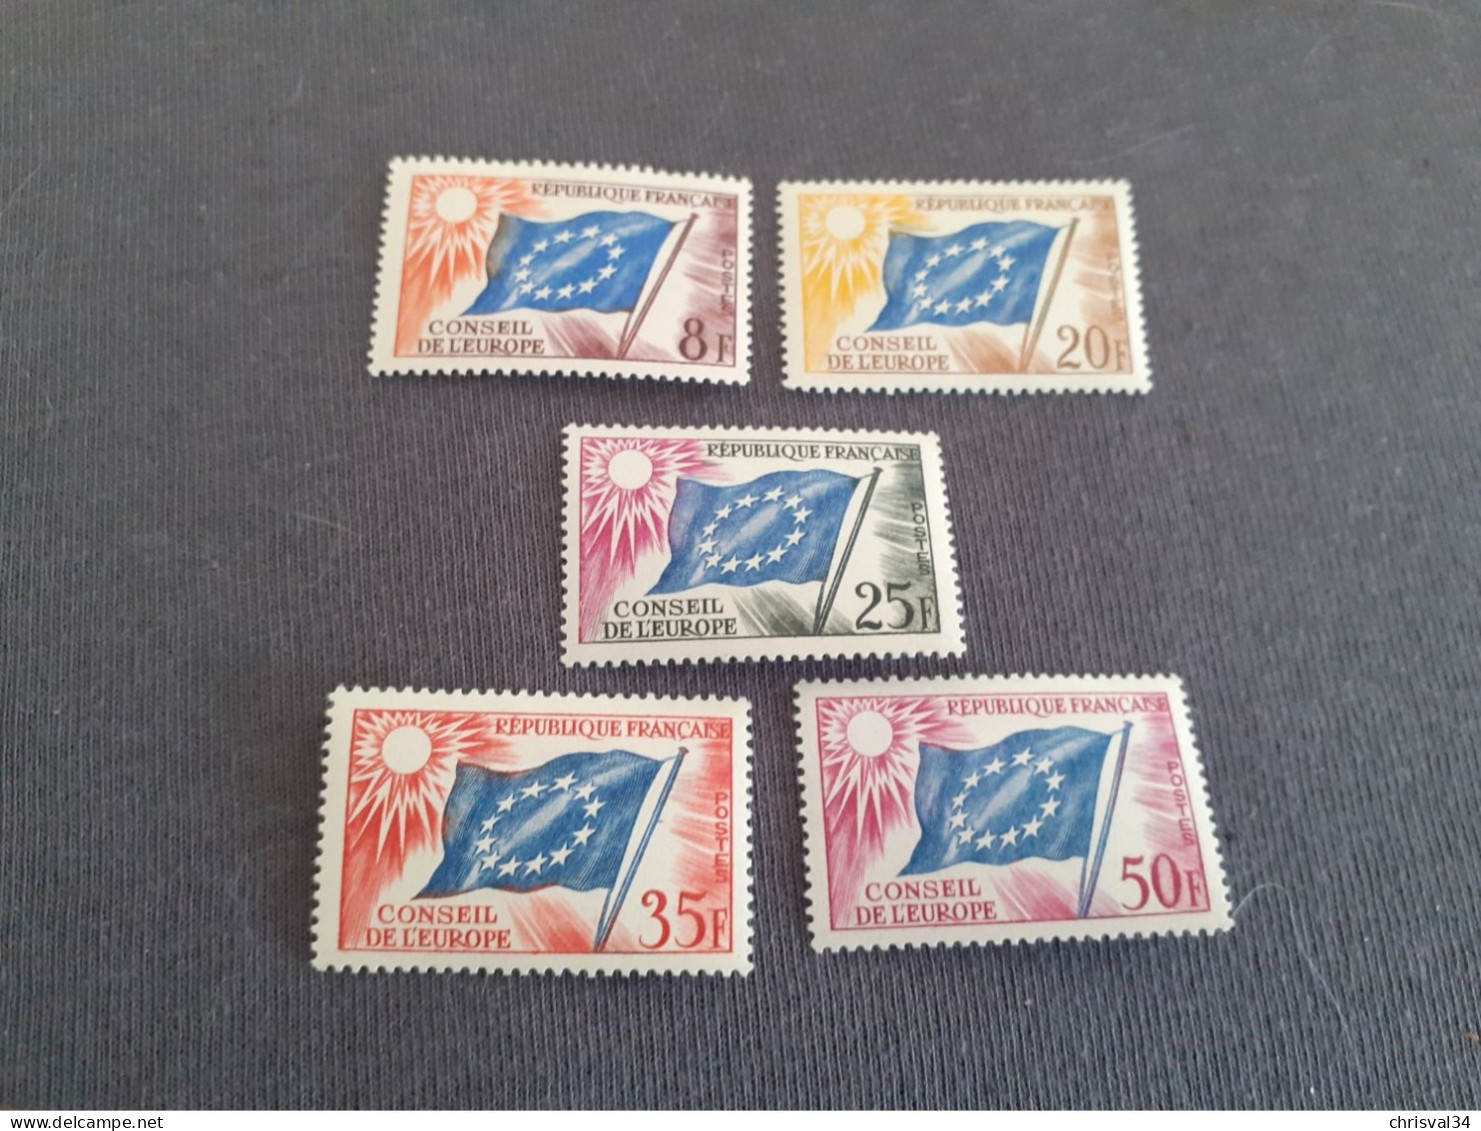 TIMBRES  DE  SERVICE  ANNEE  1958-59  N  17  A  21  COTE  6,50  EUROS  NEUFS  SANS  CHARNIERES - Mint/Hinged